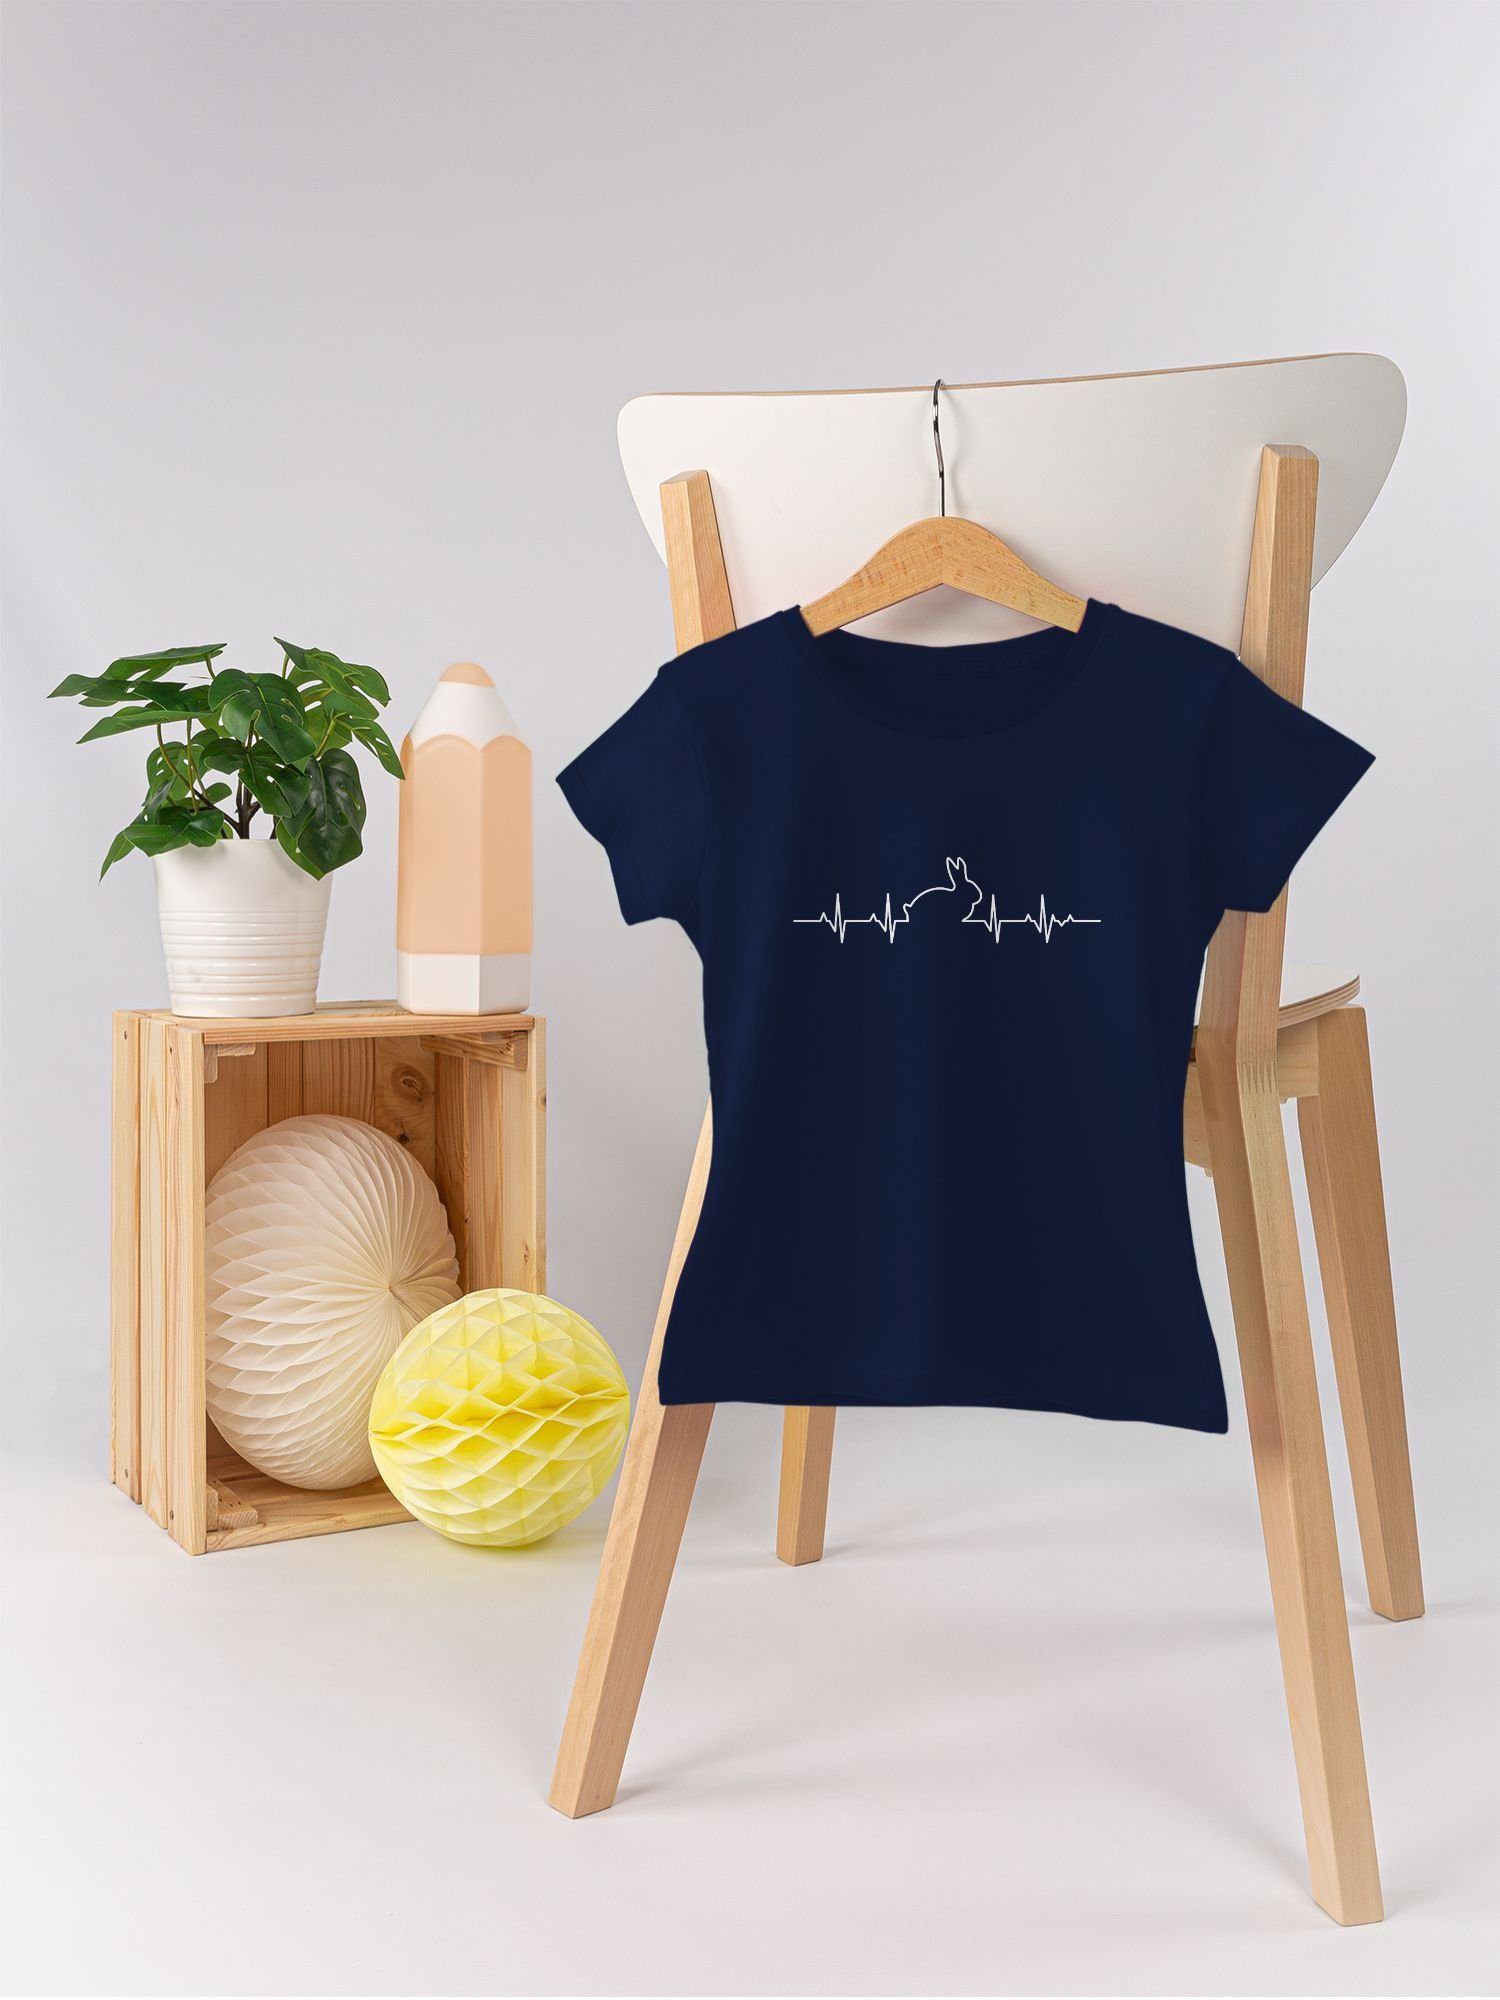 Animal Dunkelblau Hase 2 Herzschlag Print Shirtracer Tiermotiv T-Shirt